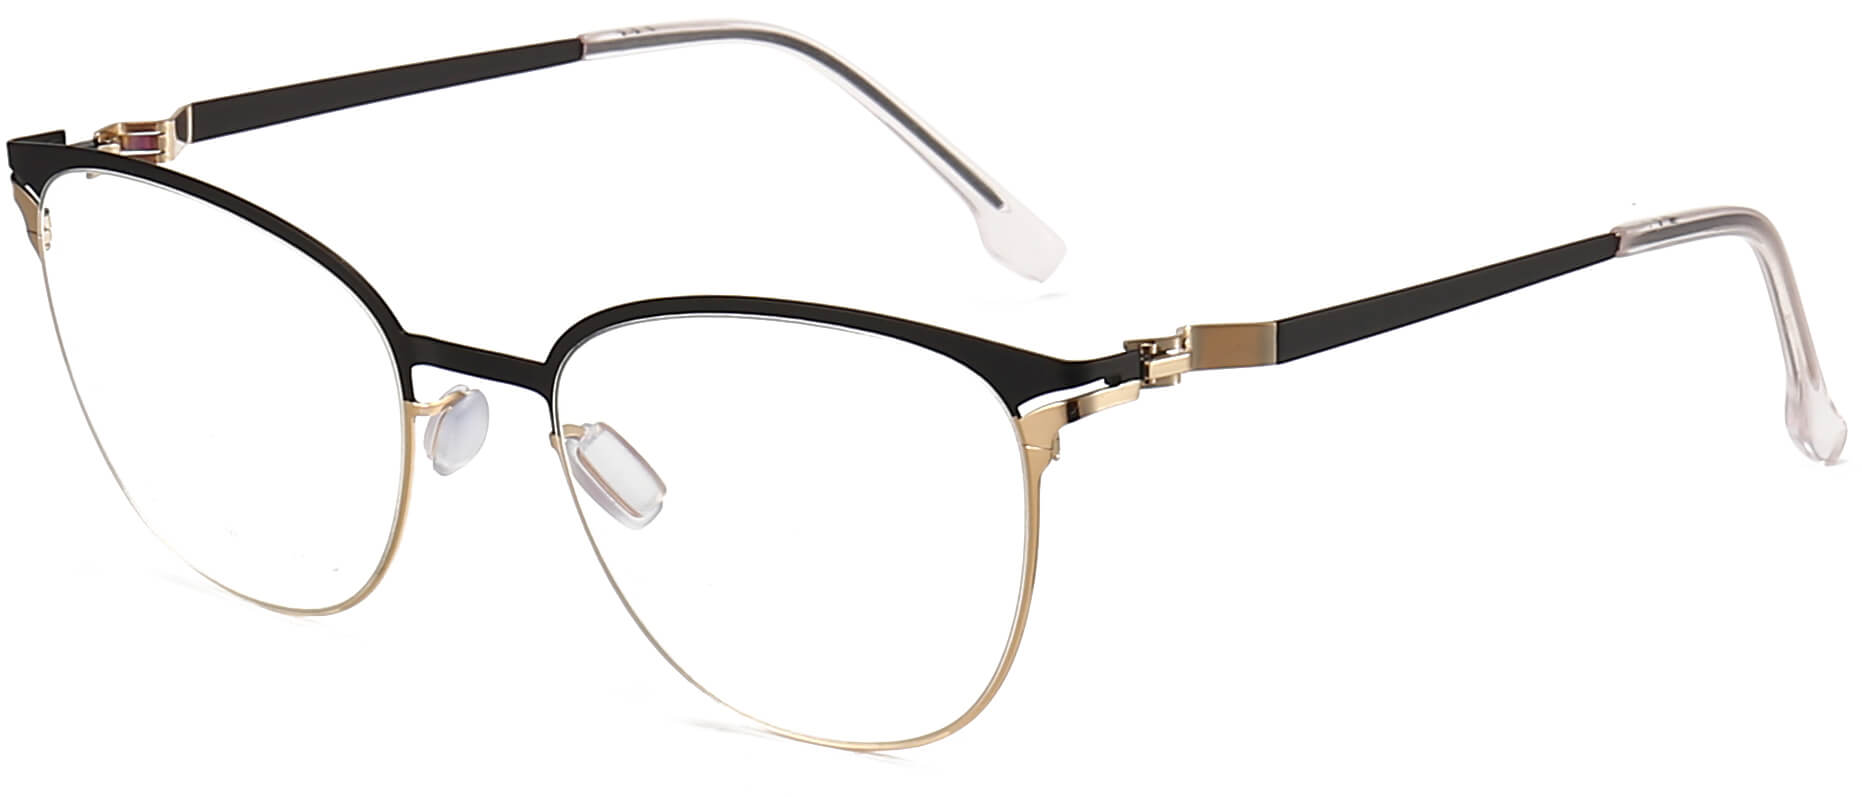 Waverly Cateye Black Eyeglasses from ANRRI, angle view